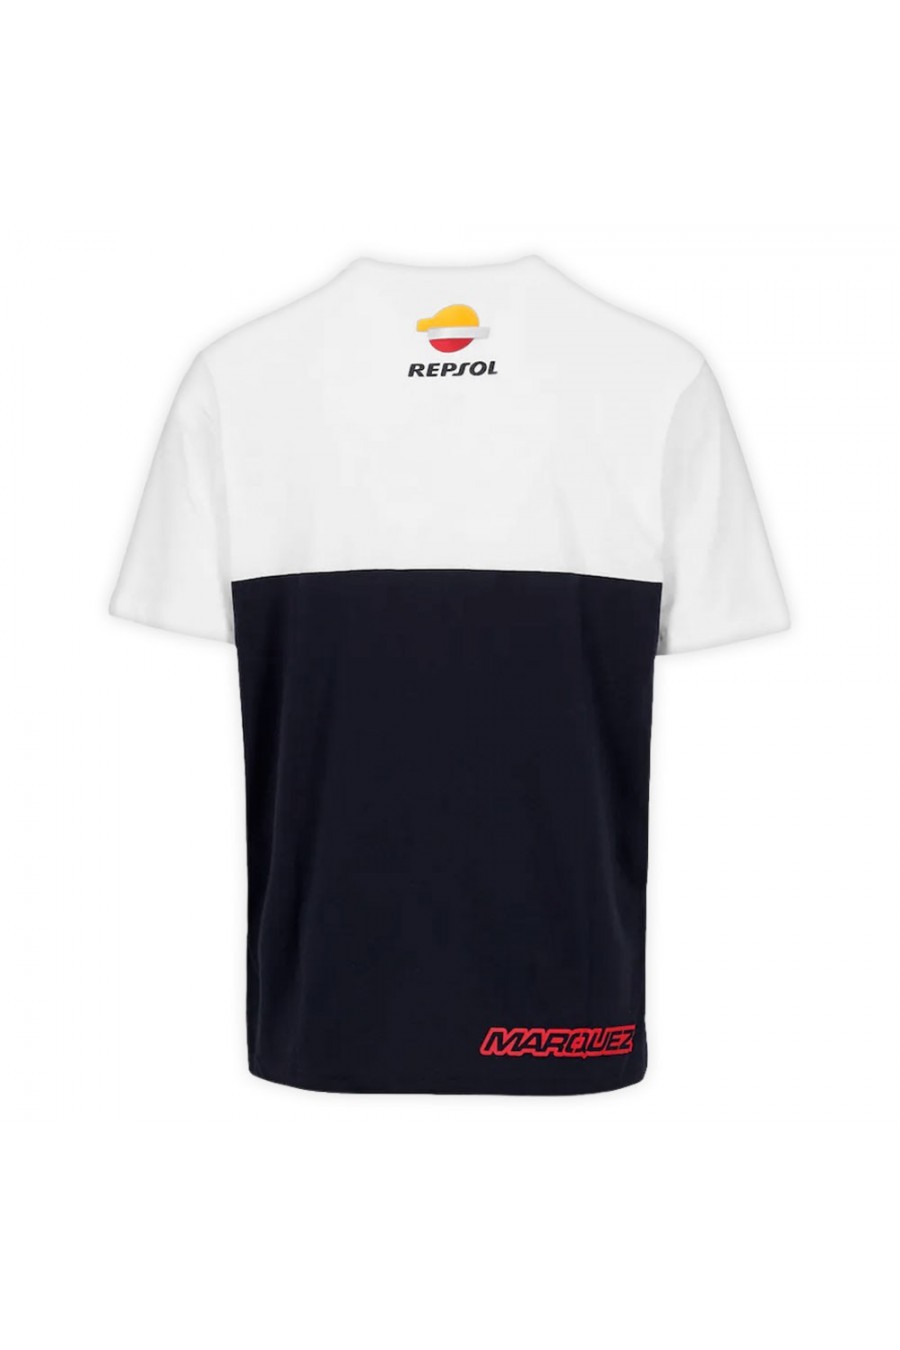 Marc Márquez 93 Dual Repsol T-shirt